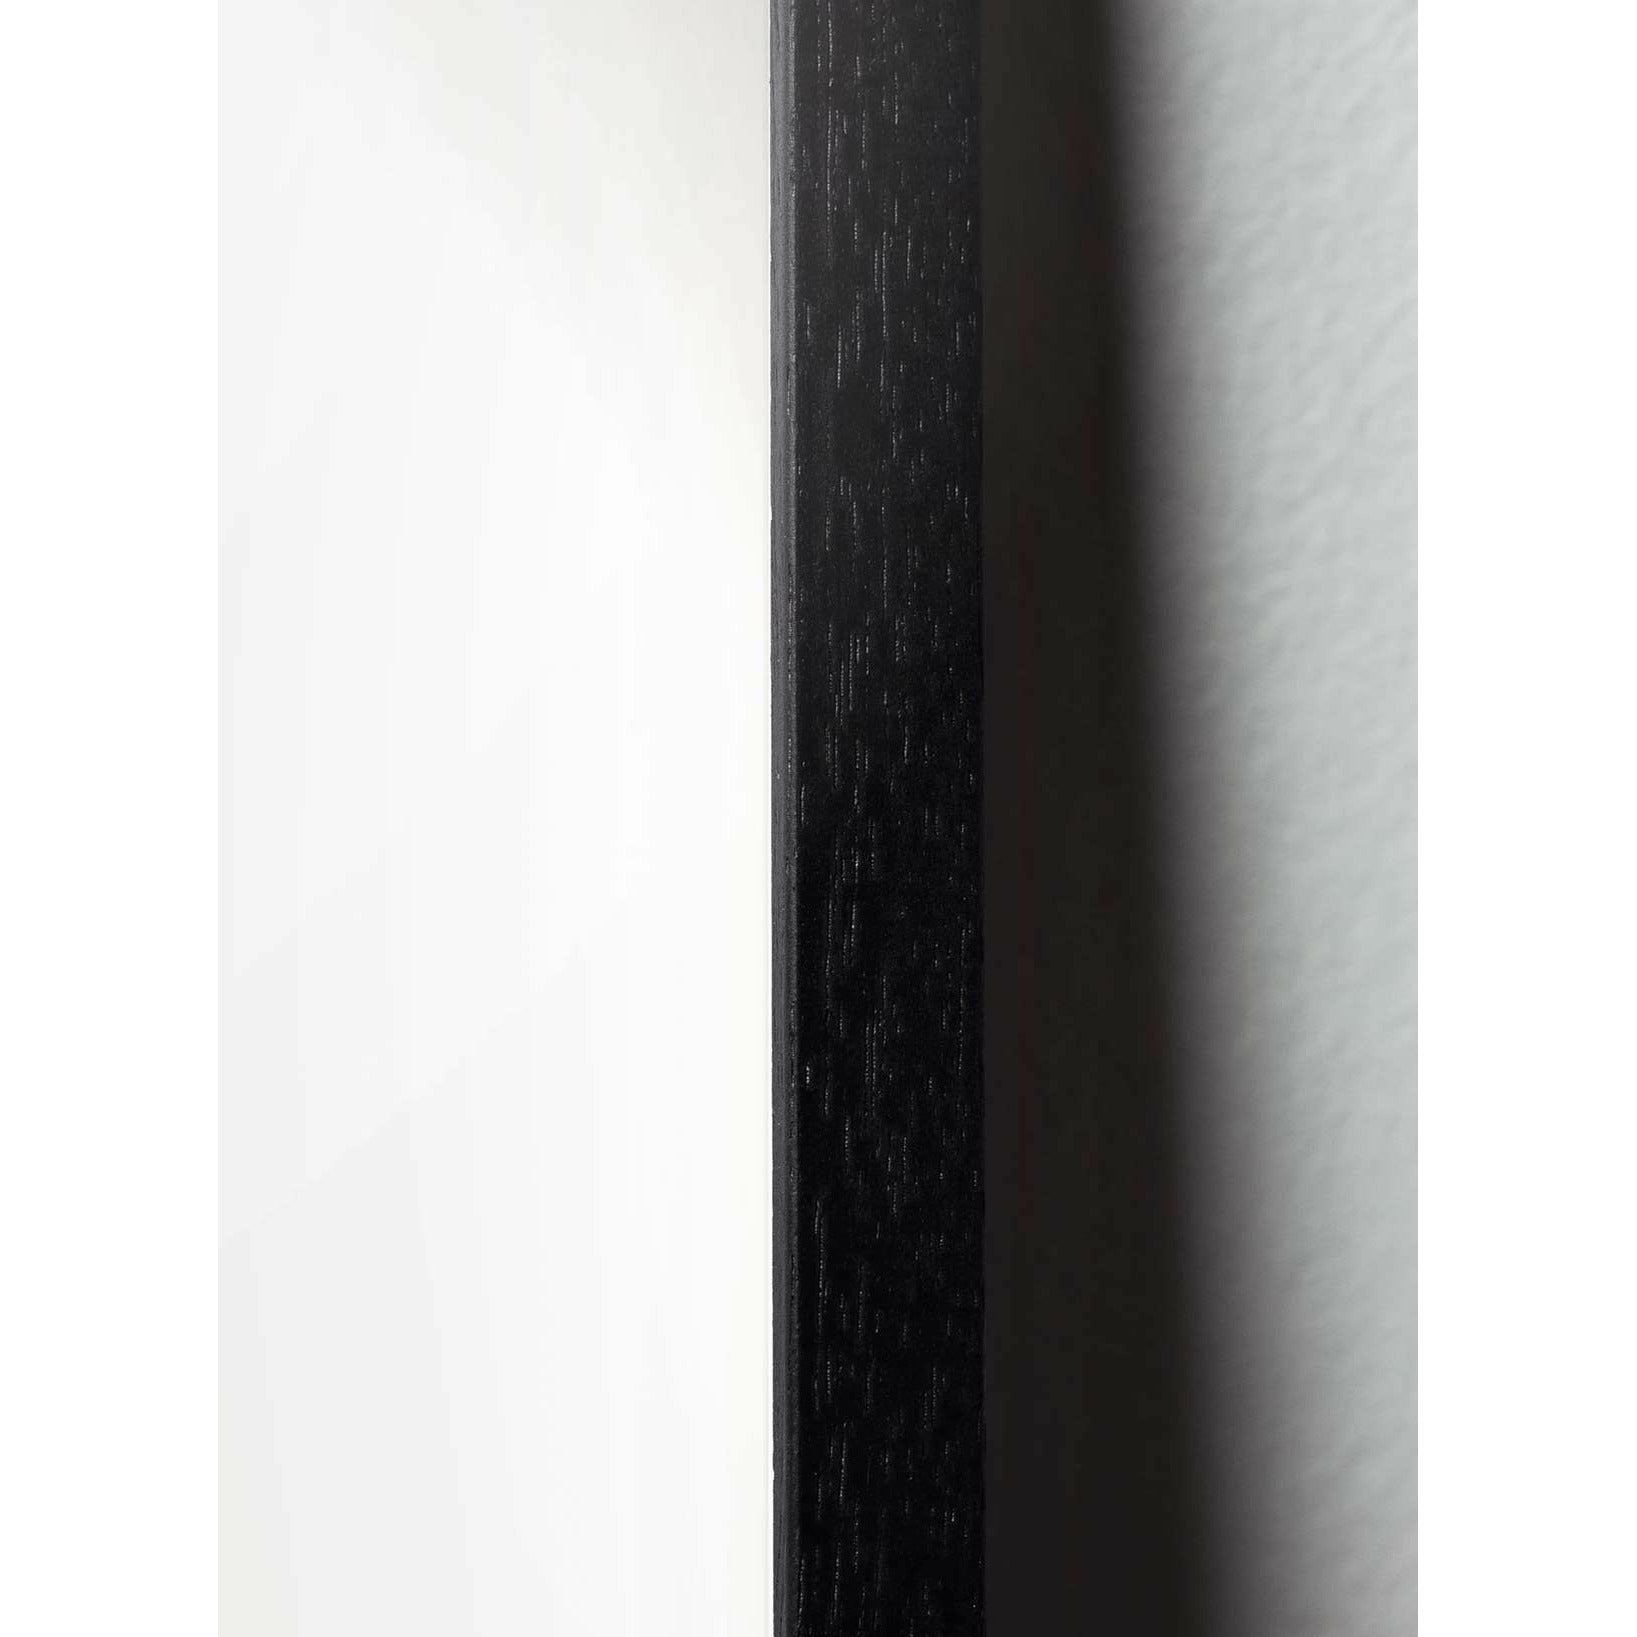 Brainchild Droppe linjeffisch, ram i svart -målat trä 30x40 cm, vit bakgrund